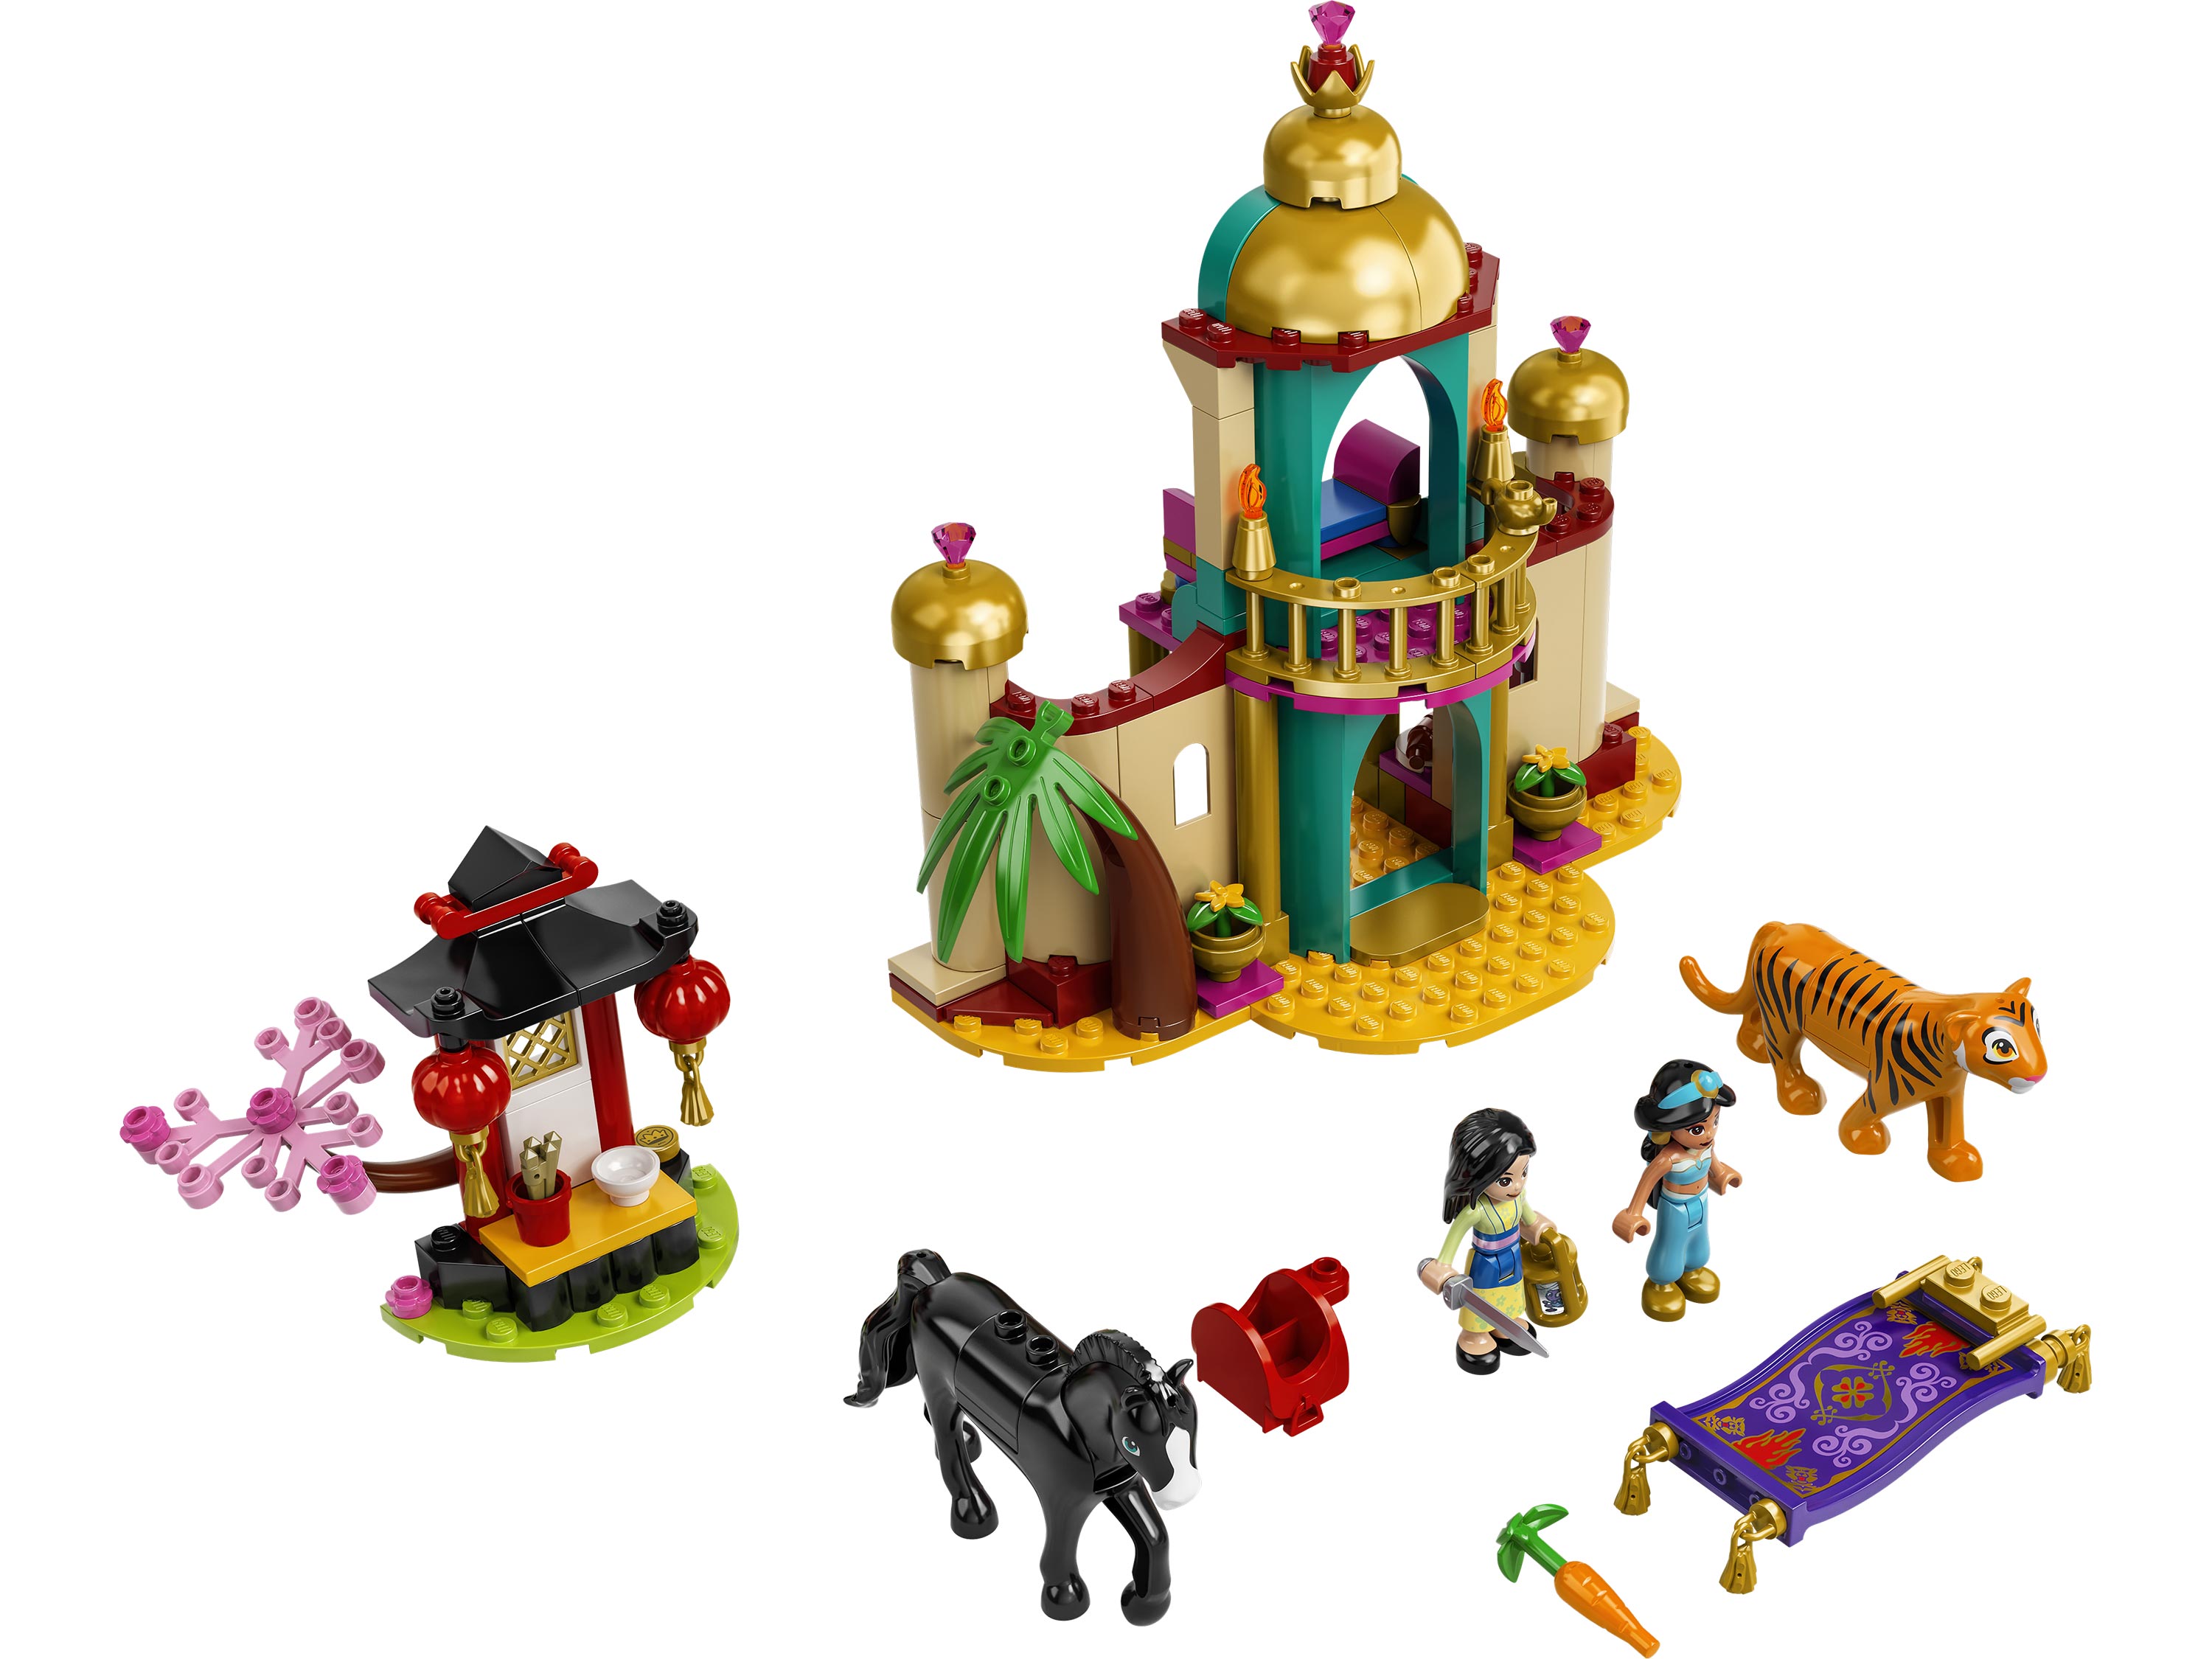 Lego Disney Princess 43208 Приключения Жасмин и Мулан